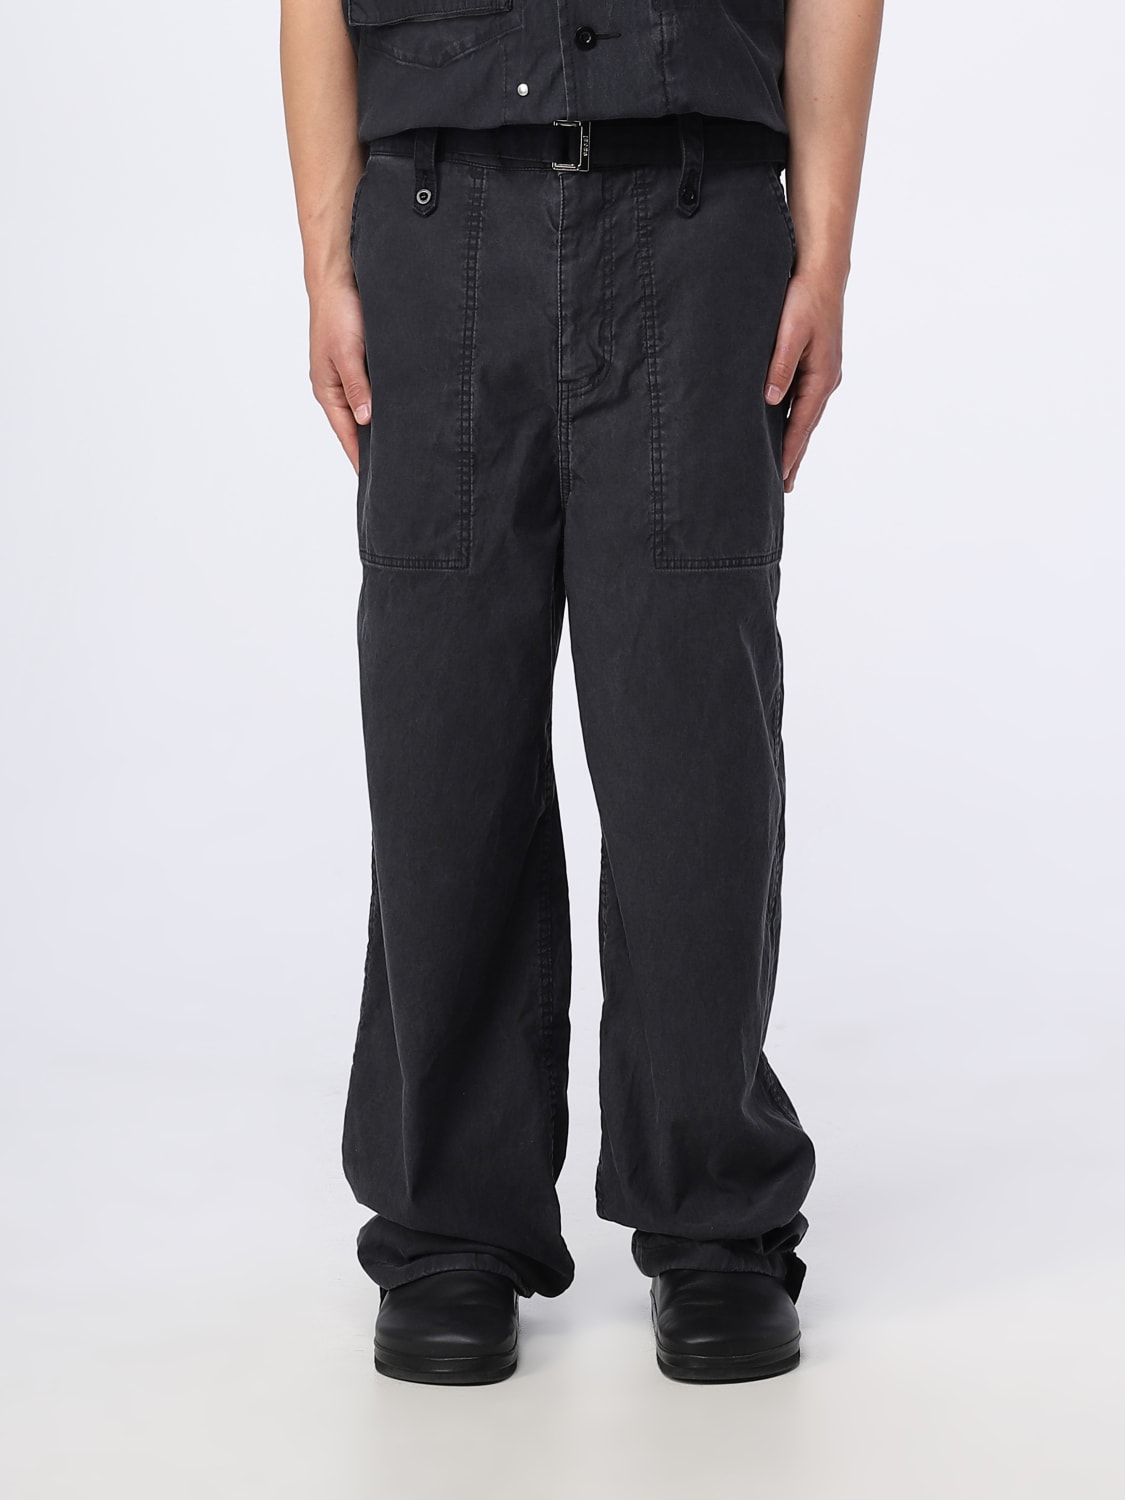 SACAI: pants for man - Black | Sacai pants 03049M online at GIGLIO.COM